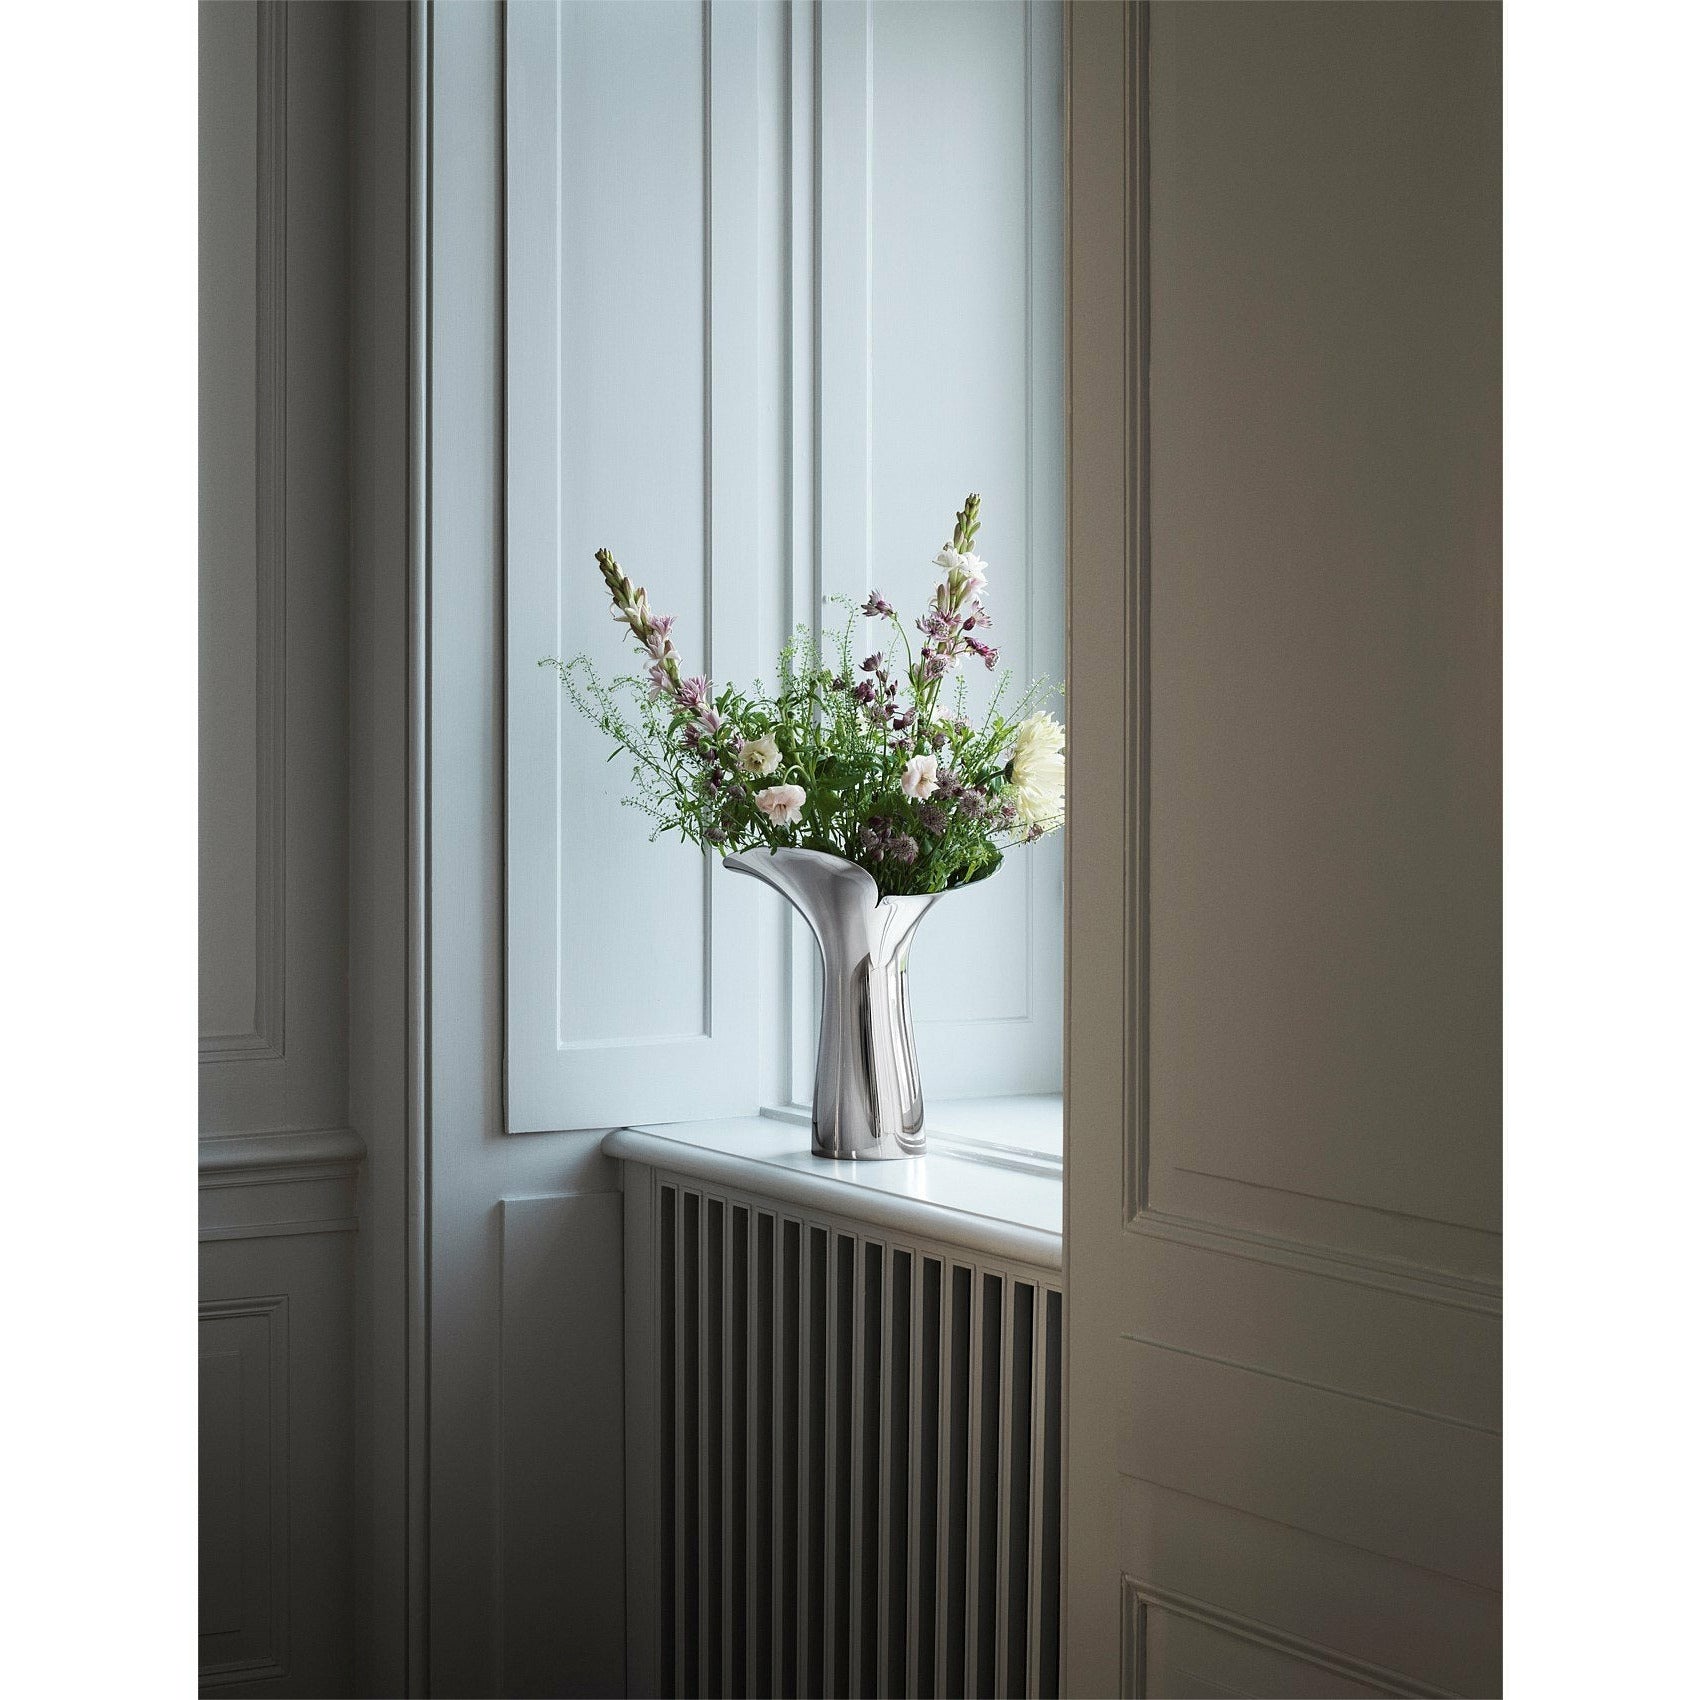 Georg Jensen Bloom Botanica Vase, 150mm